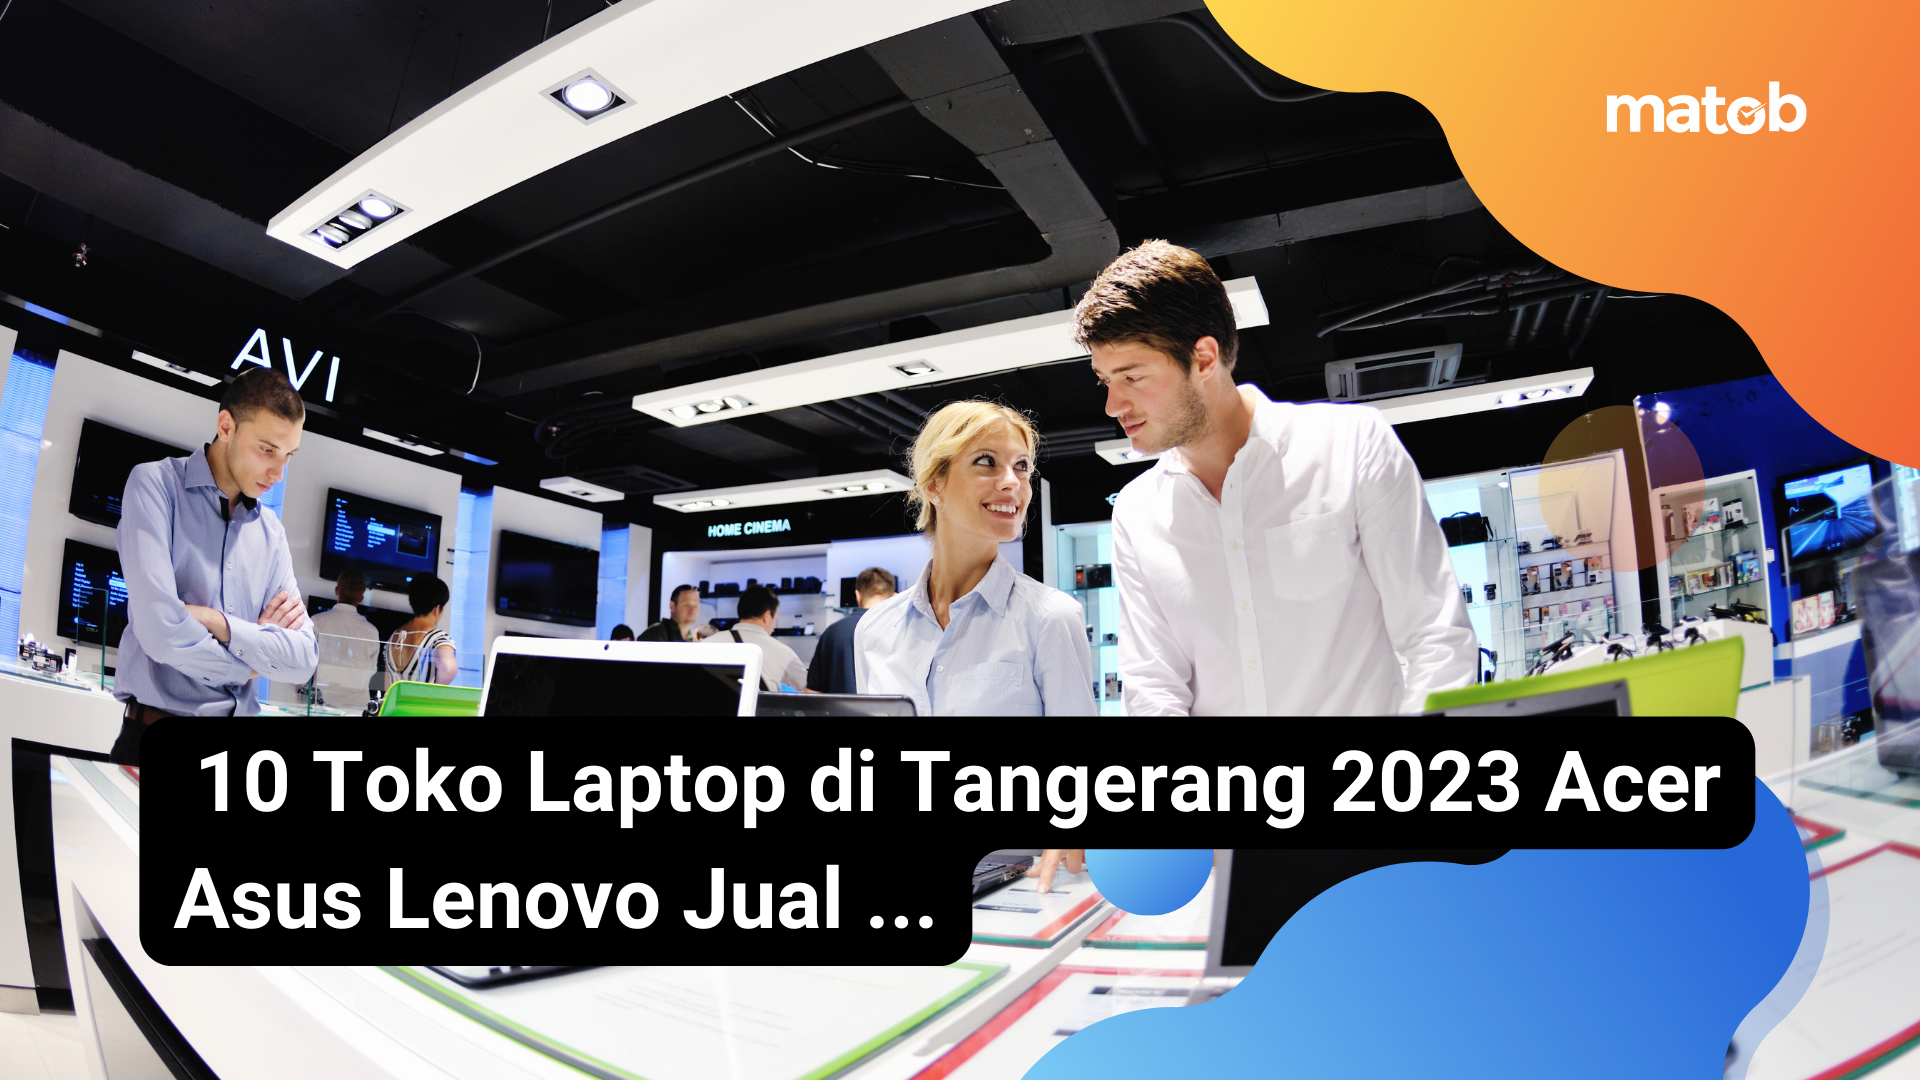 6.1 Matob Bisnis 10 Toko Laptop di Tangerang 2023 Acer Asus Lenovo Jual...